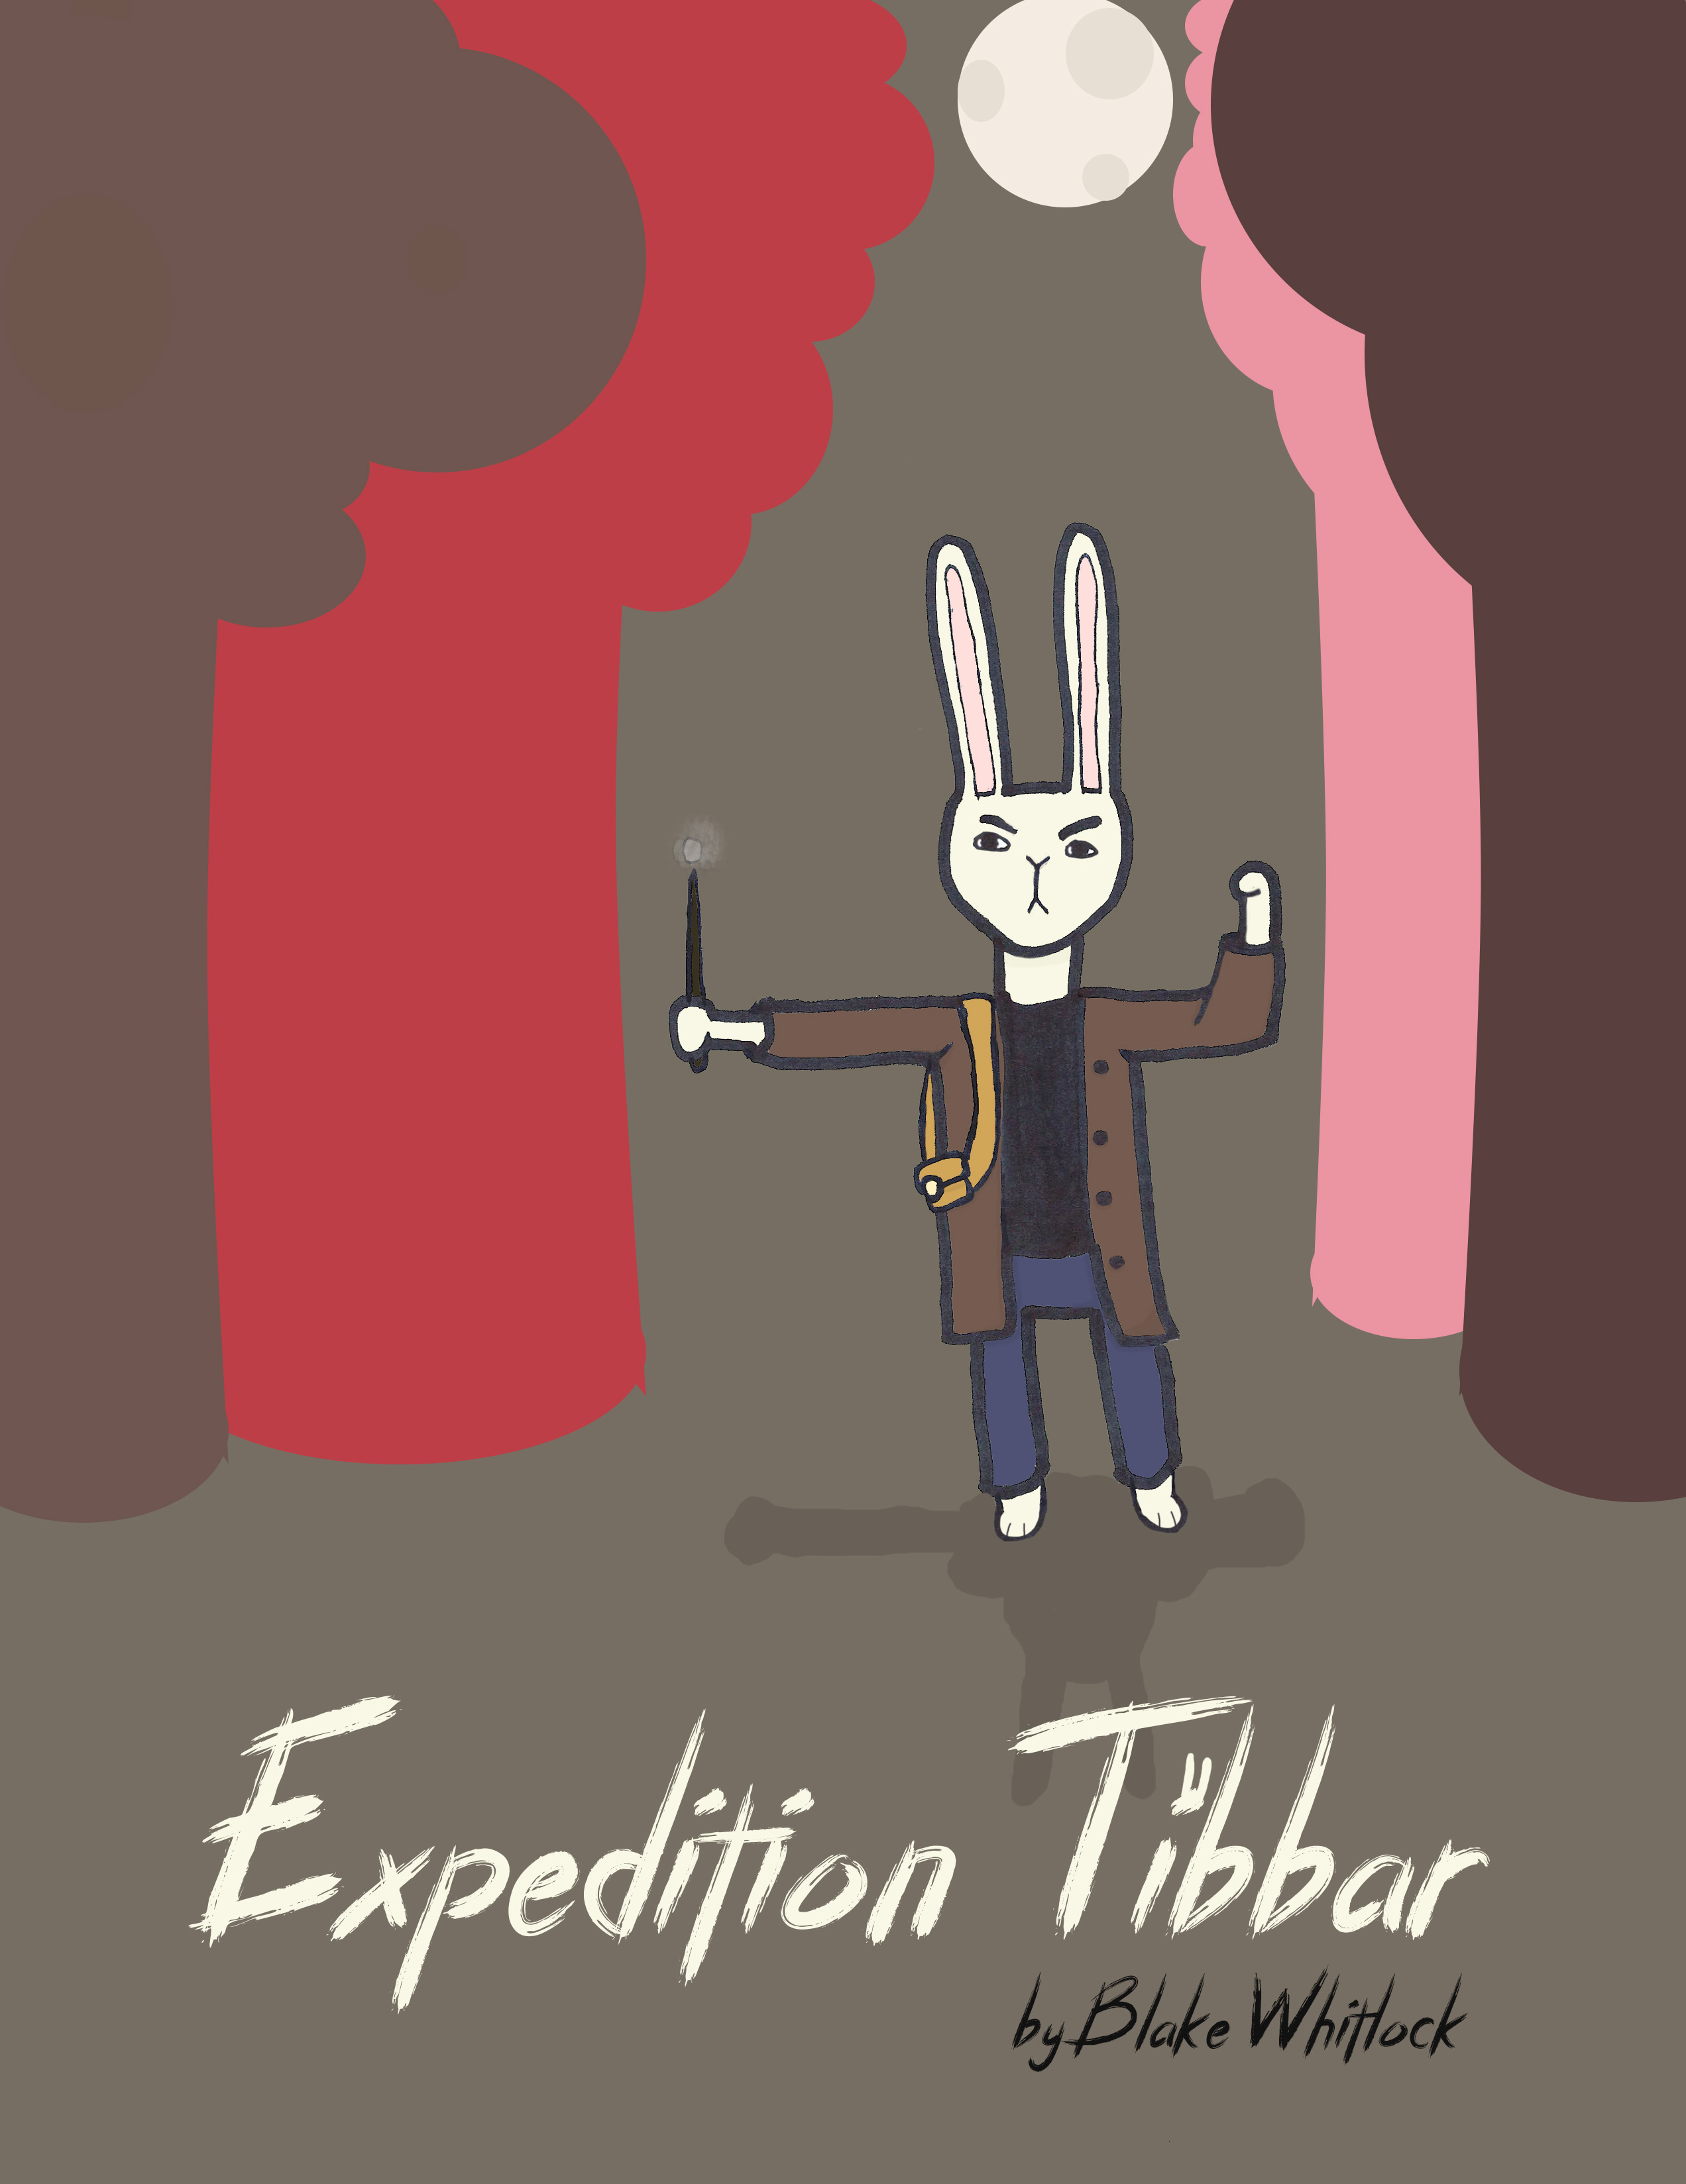 FREE: Expedition Tibbar by Blake Whitlock